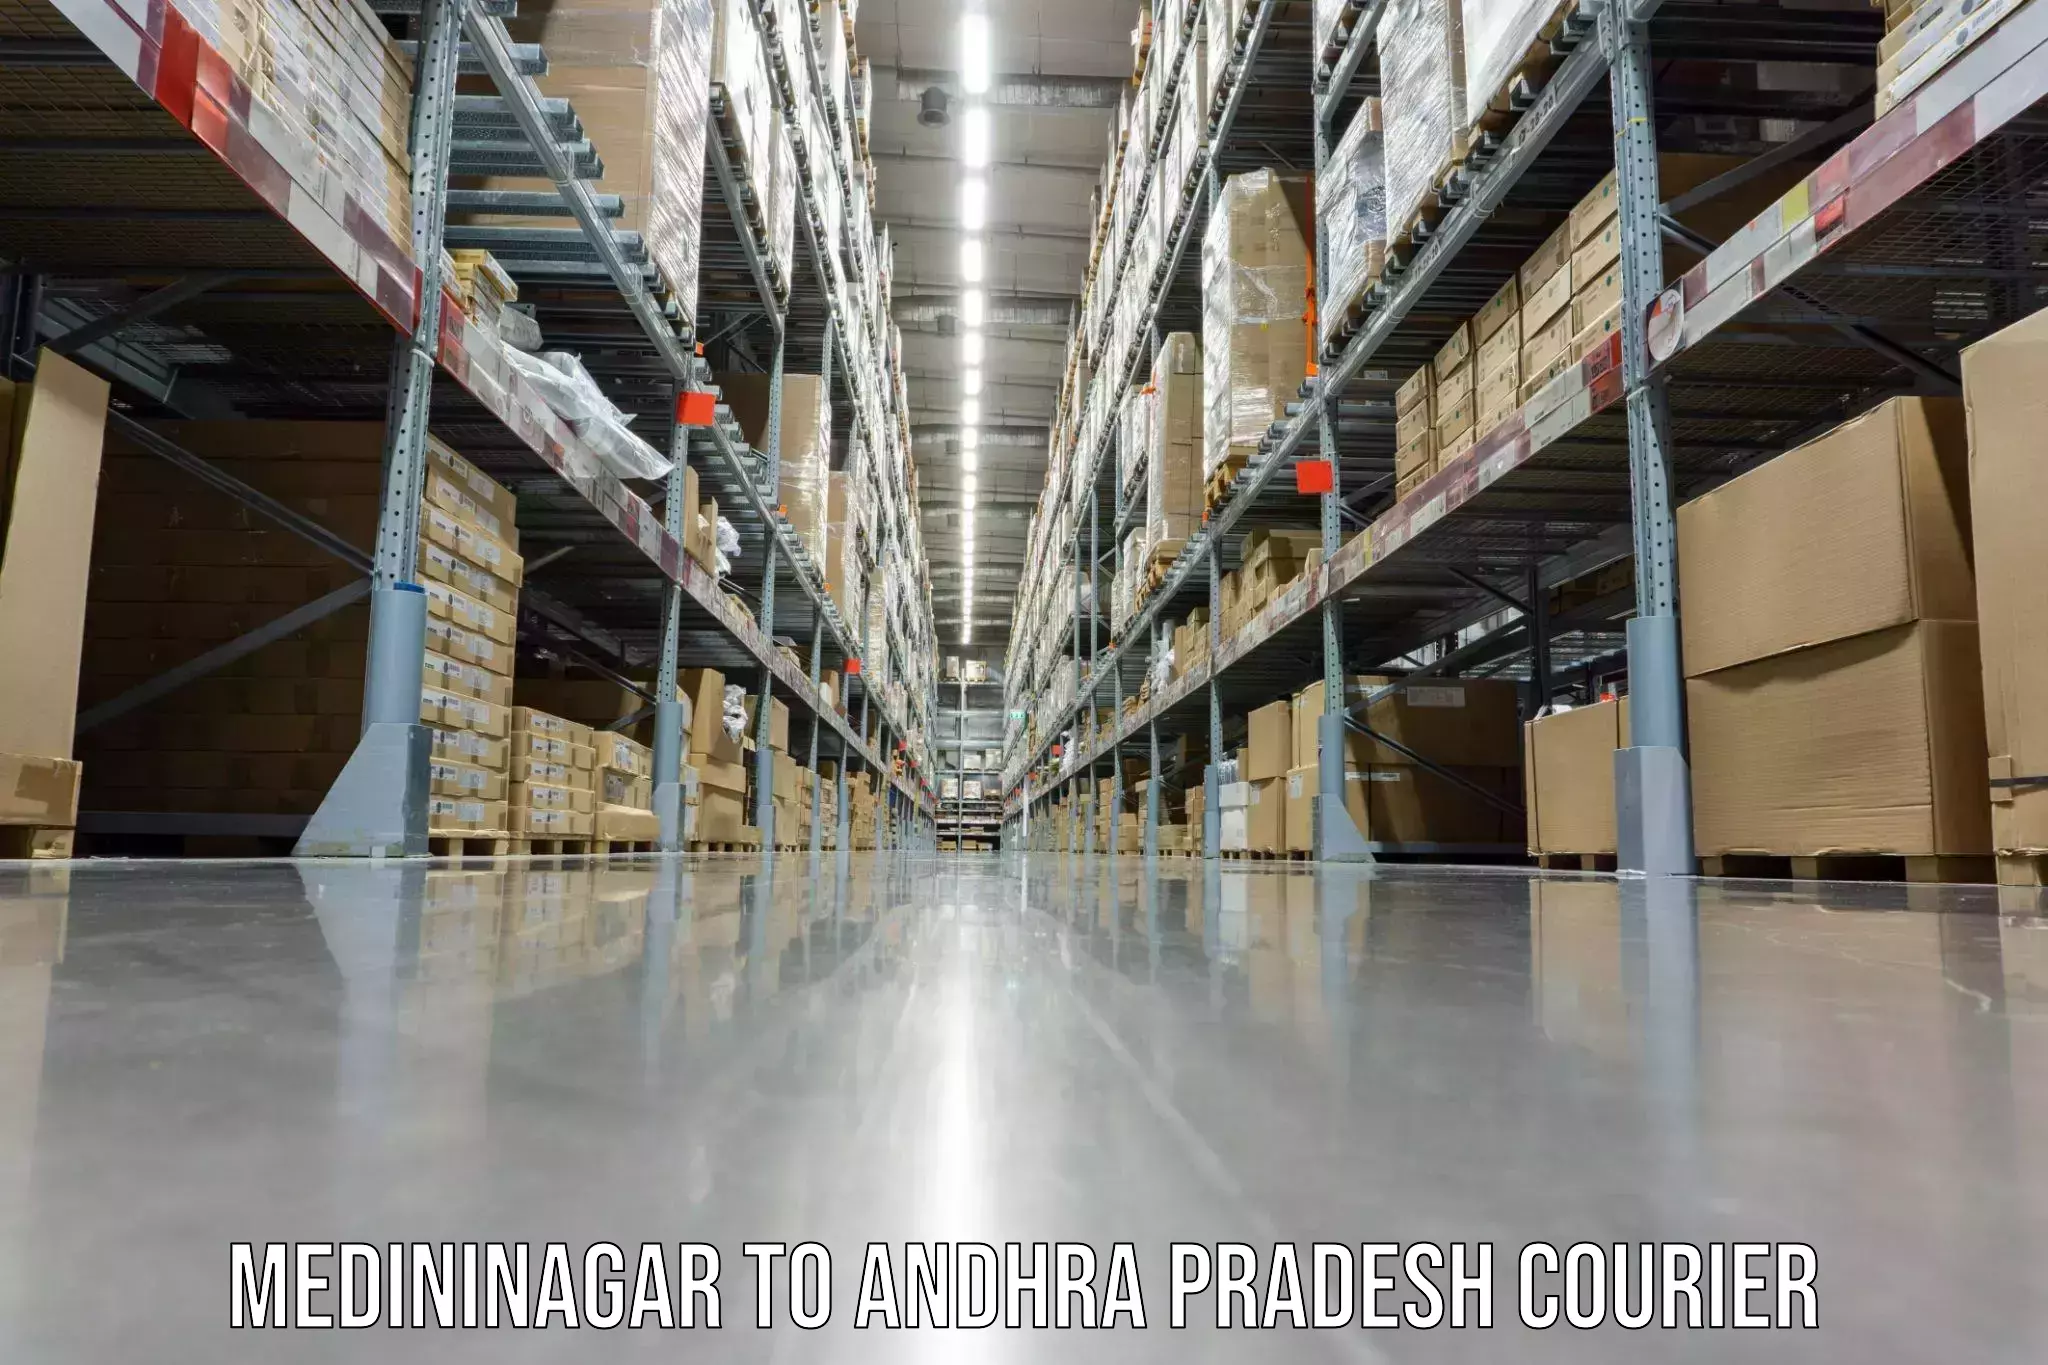 Quality moving company in Medininagar to Chandragiri